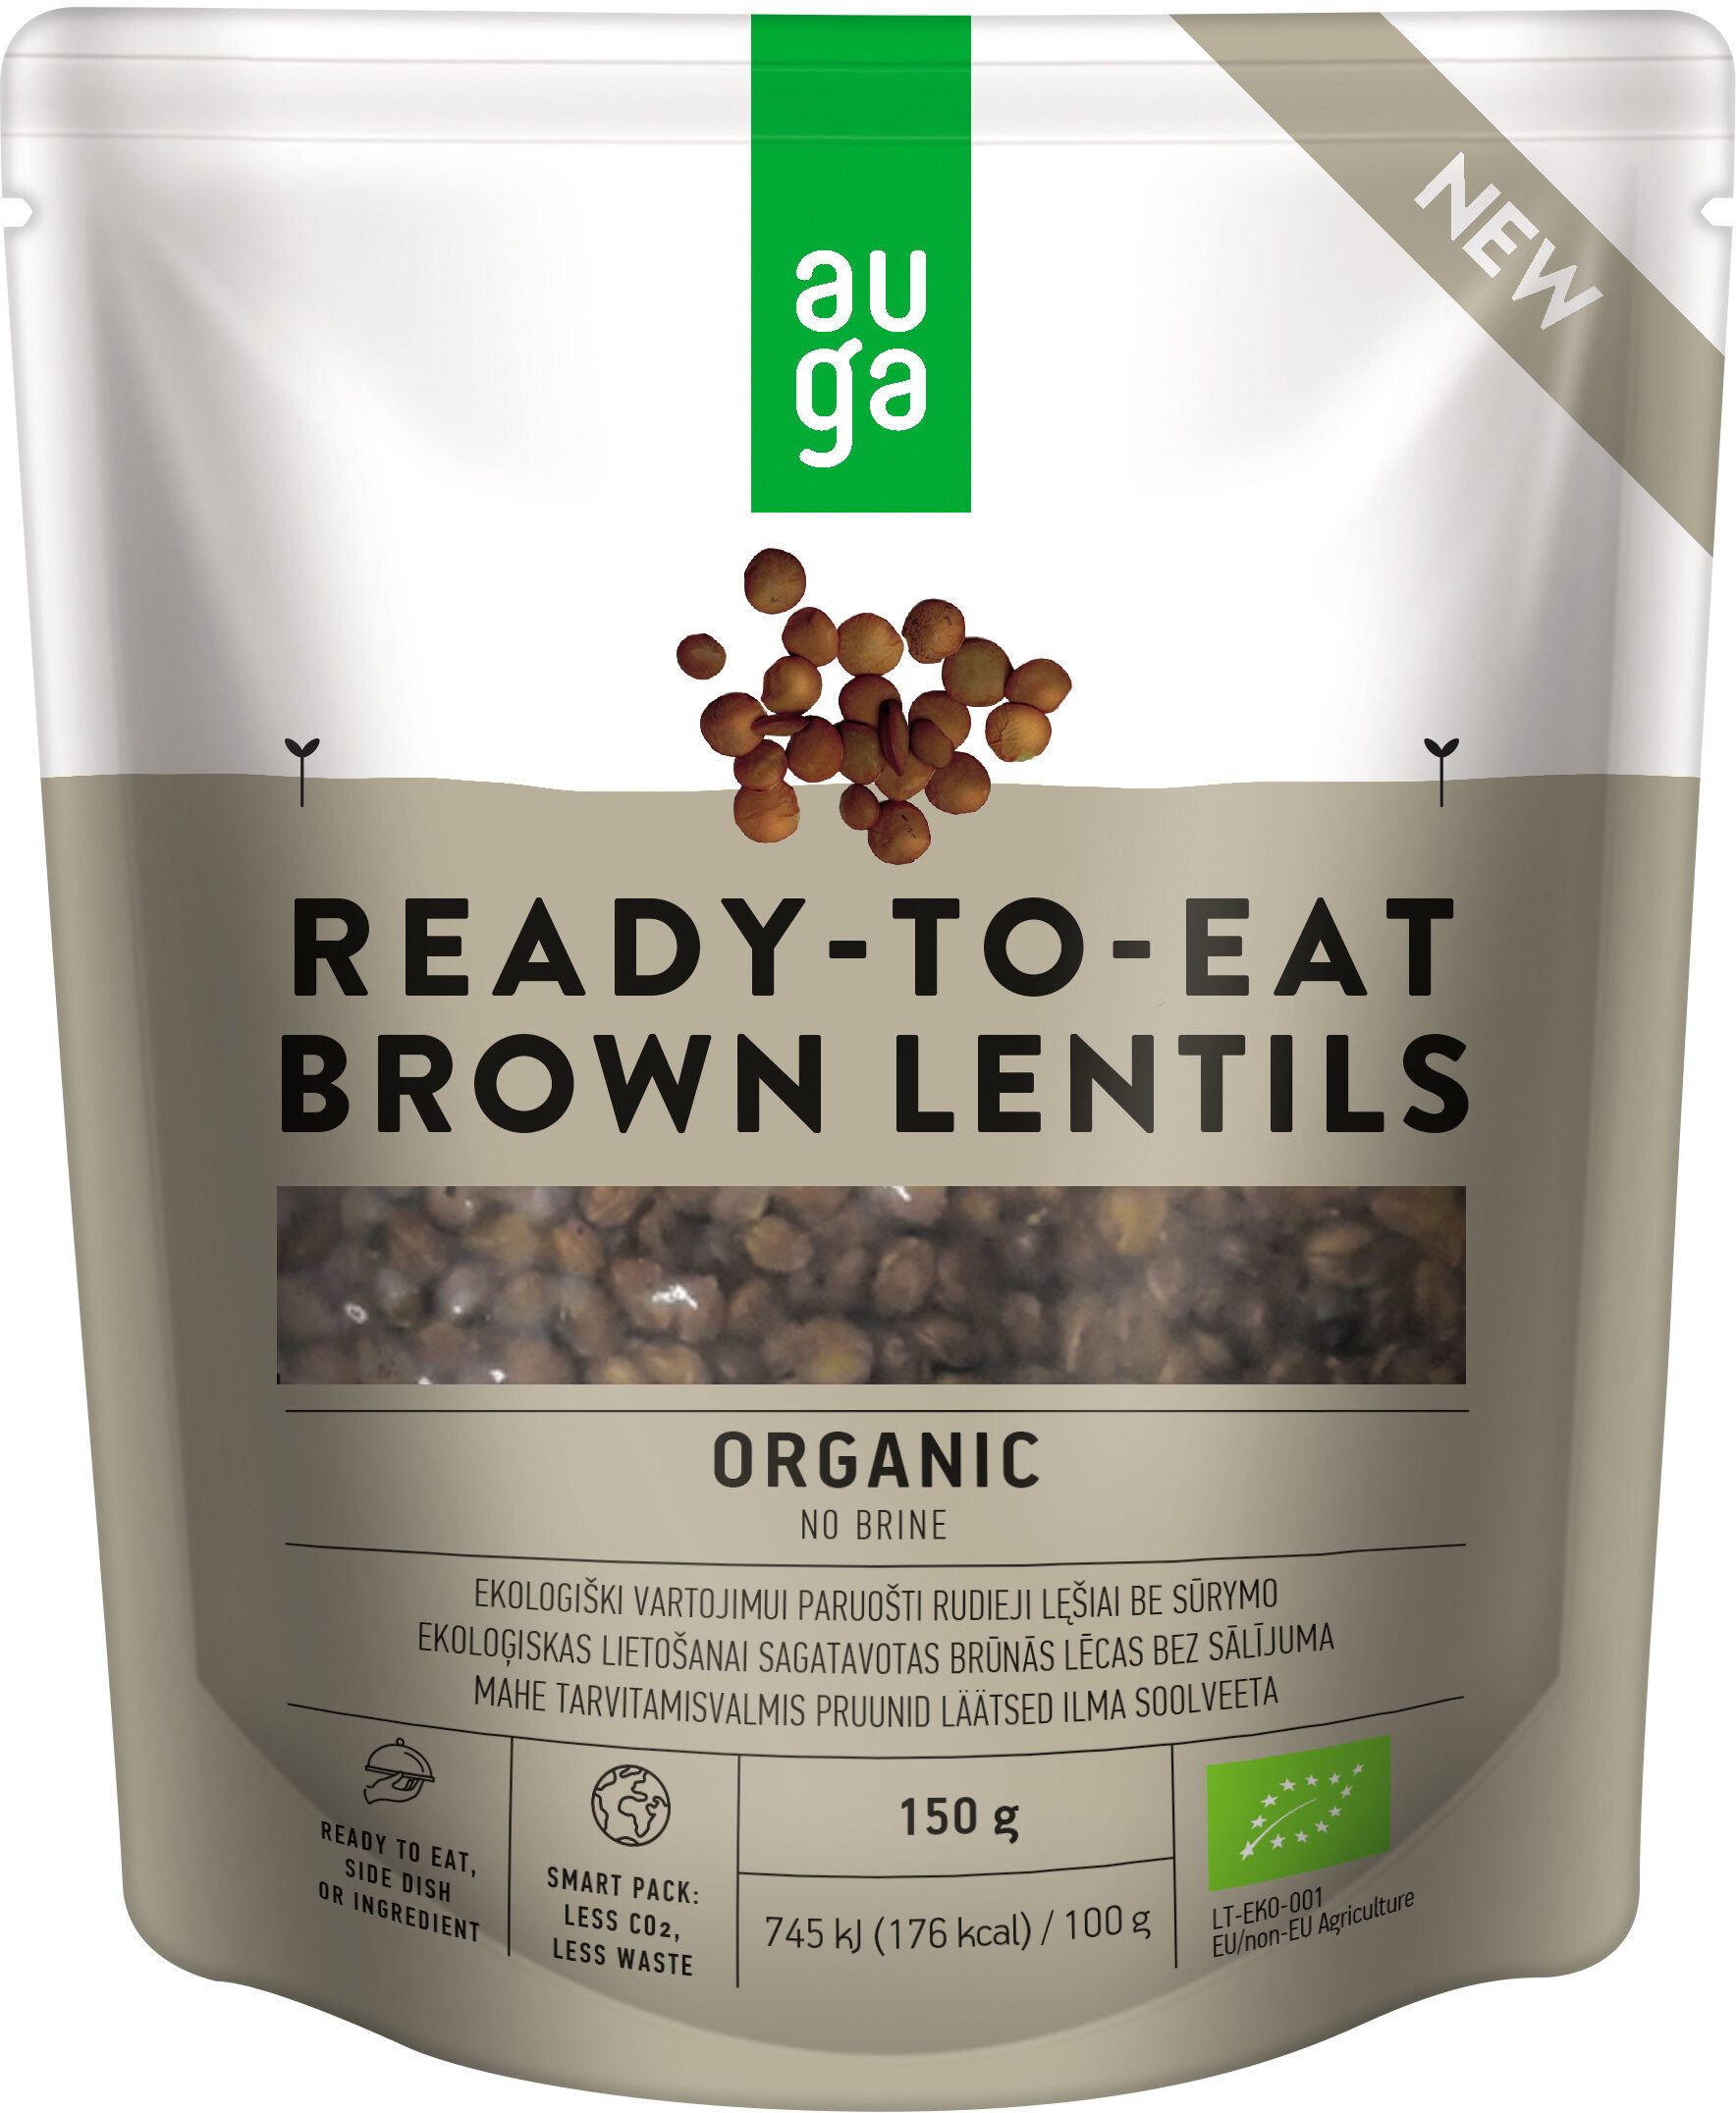 Ready-To-Eat Brown Lentils - Produktas - en